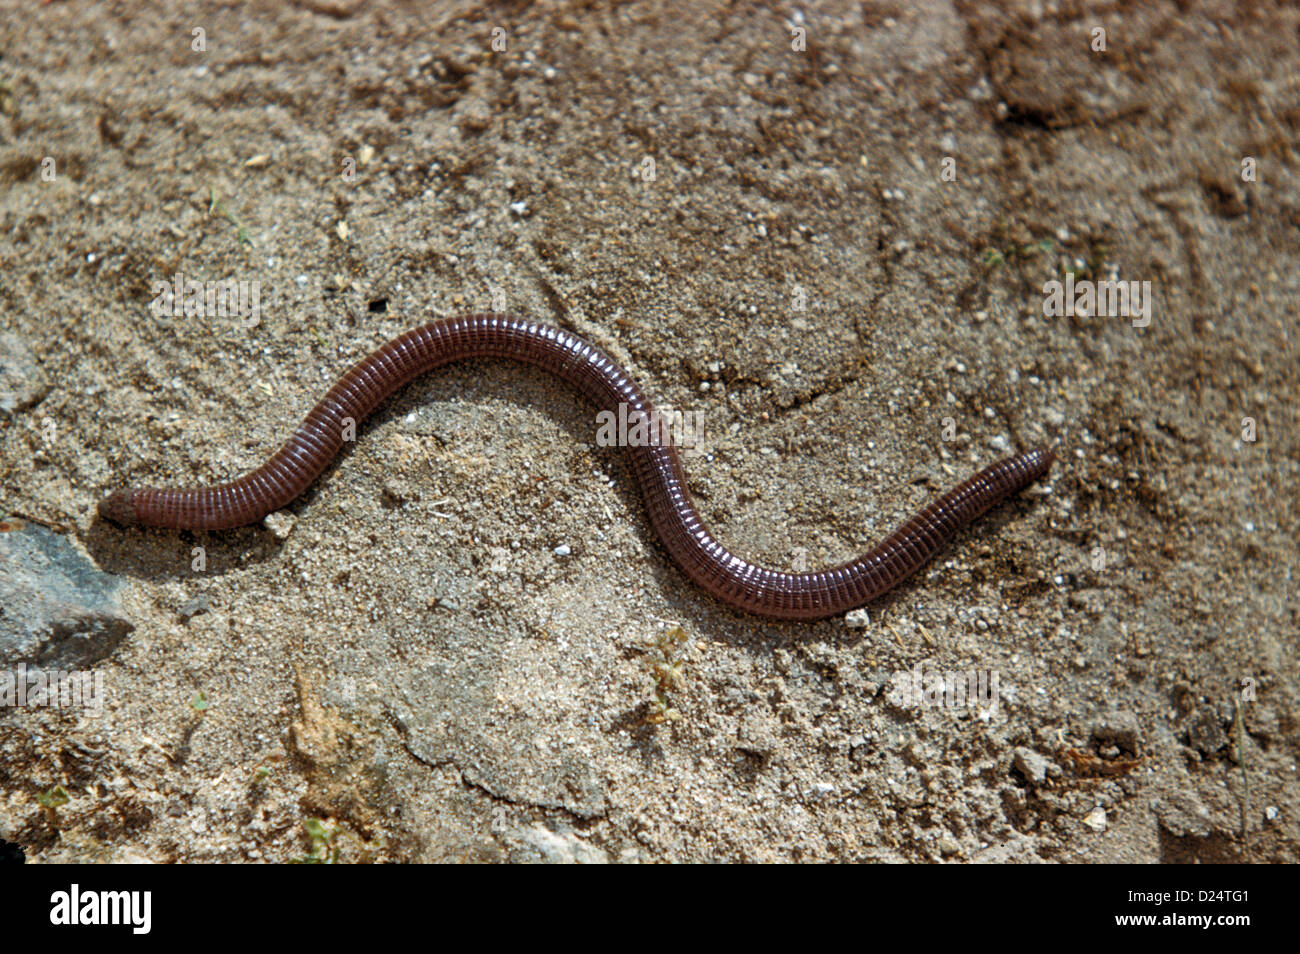 Worm Lizard (Blanus cinereus) On sand Stock Photo